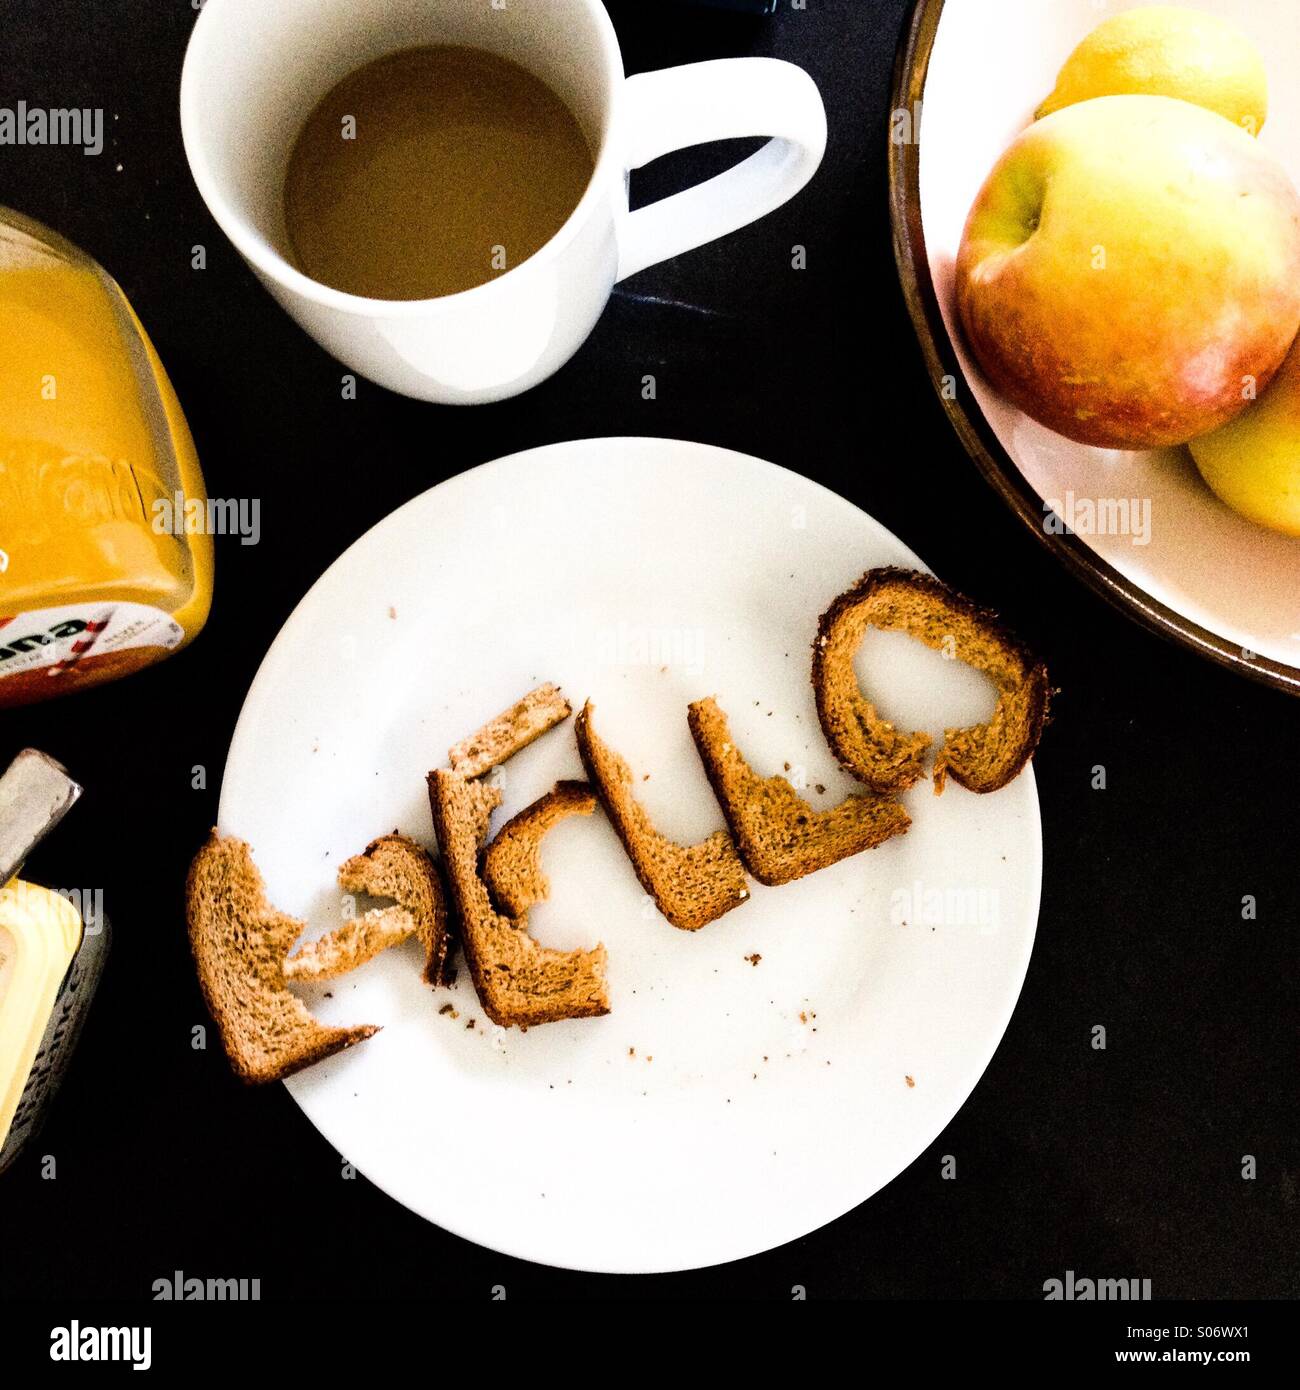 Hello to breakfast! Stock Photo